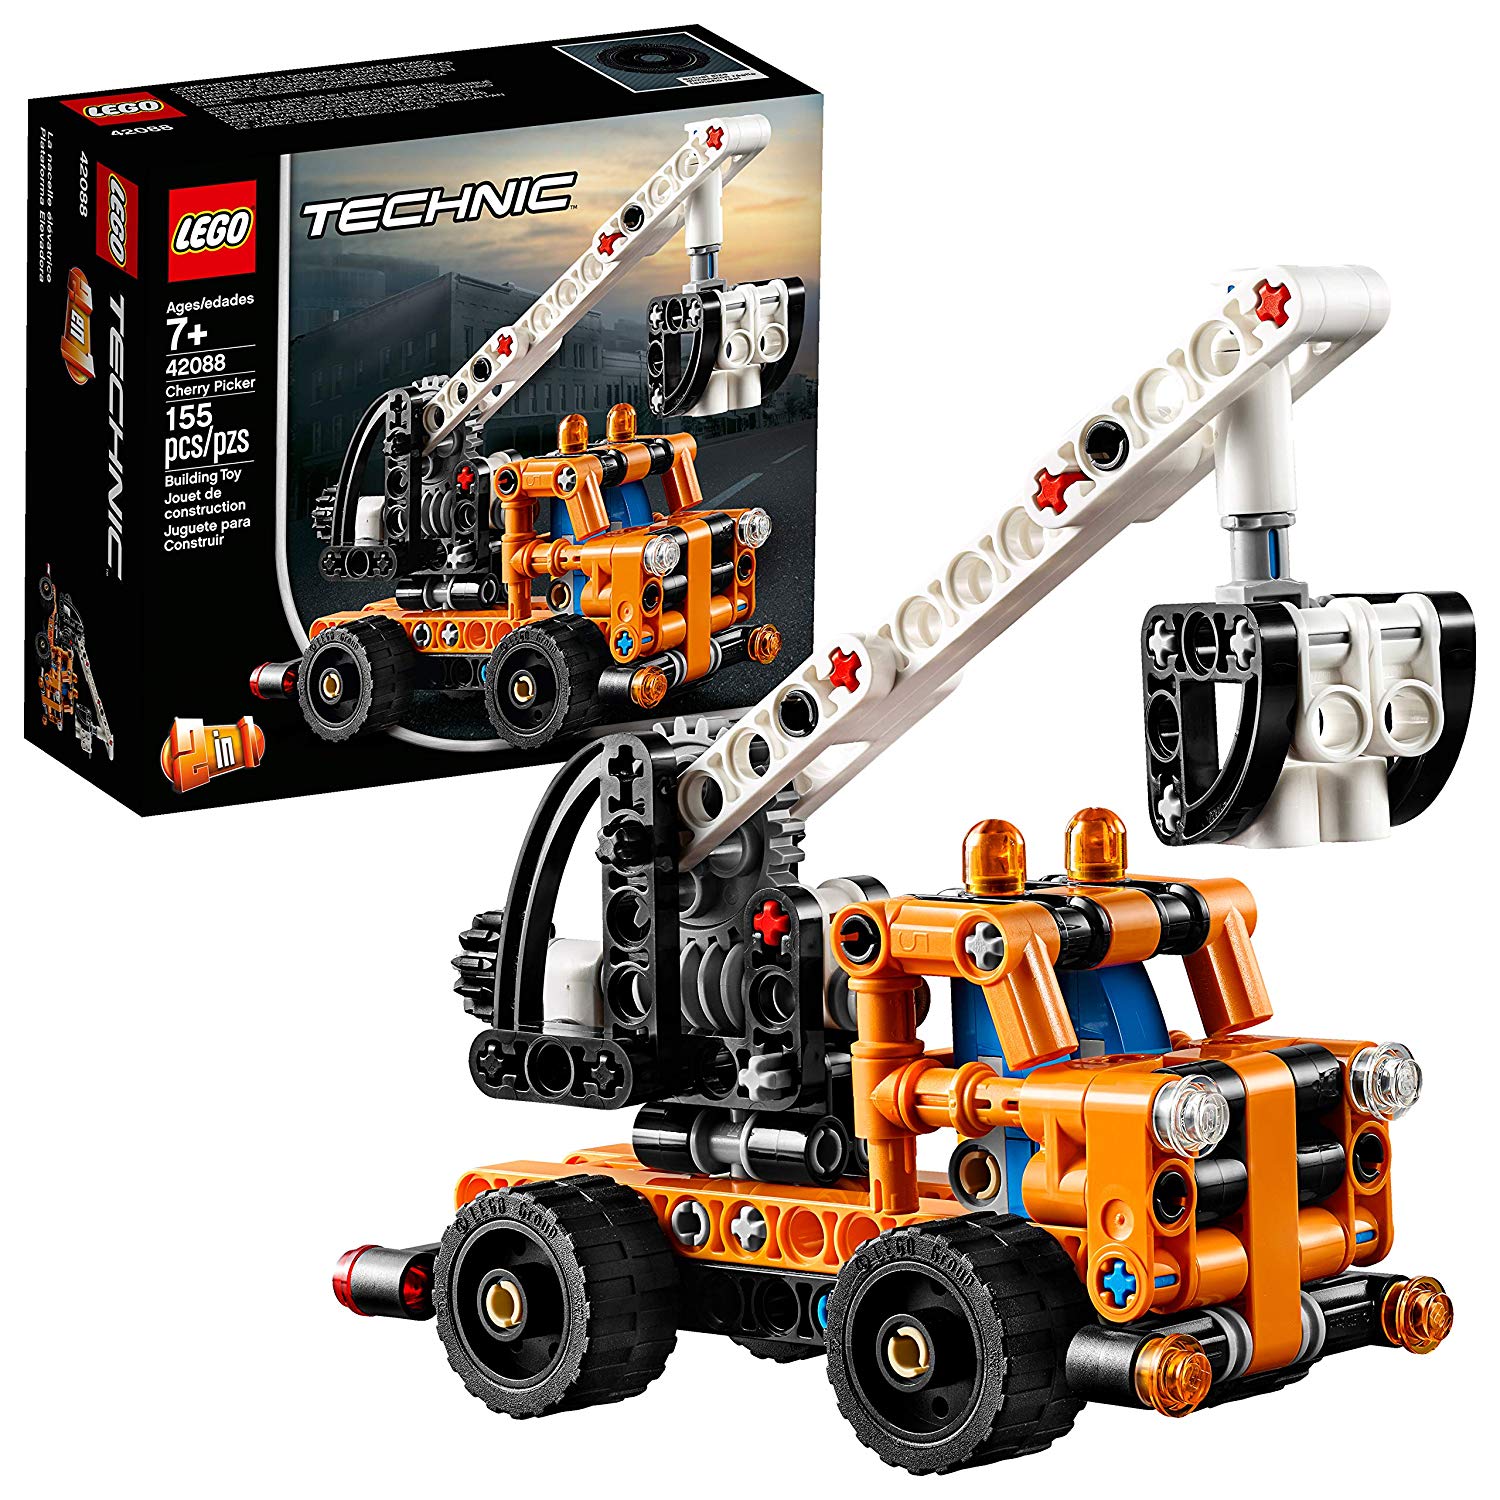 Technic Lego 42088 Cherry Picker Construction Set New 2019 (155 Pieces)